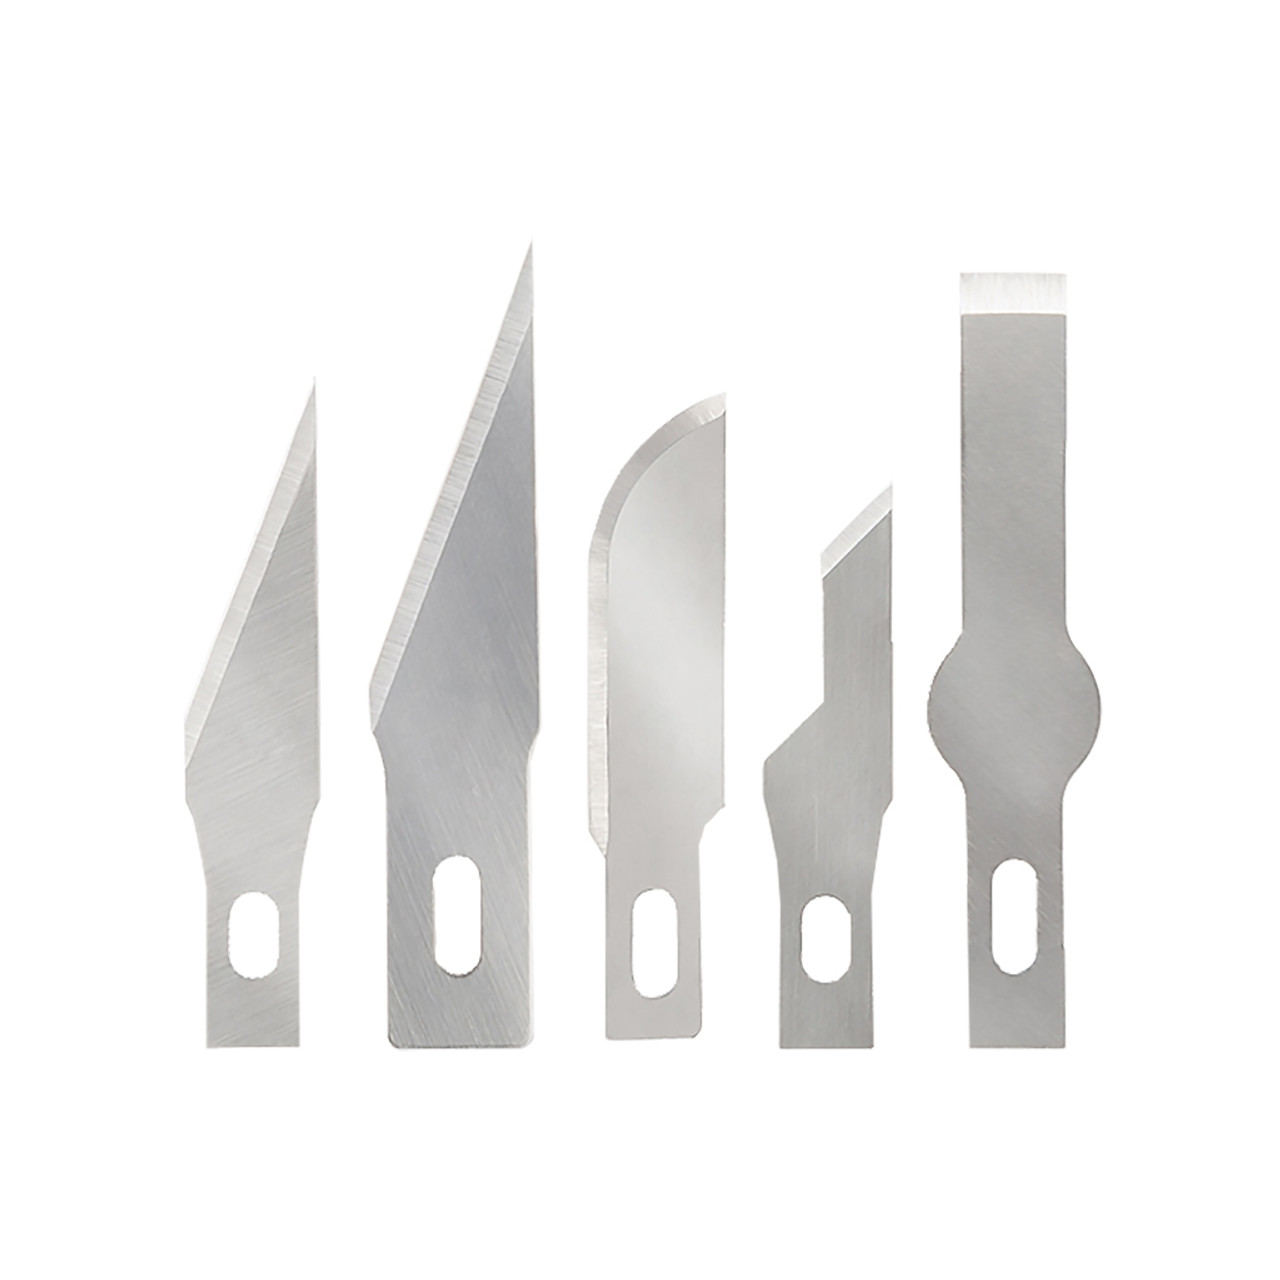 Fiskars Craft Knife Replacement Blades 5 pack